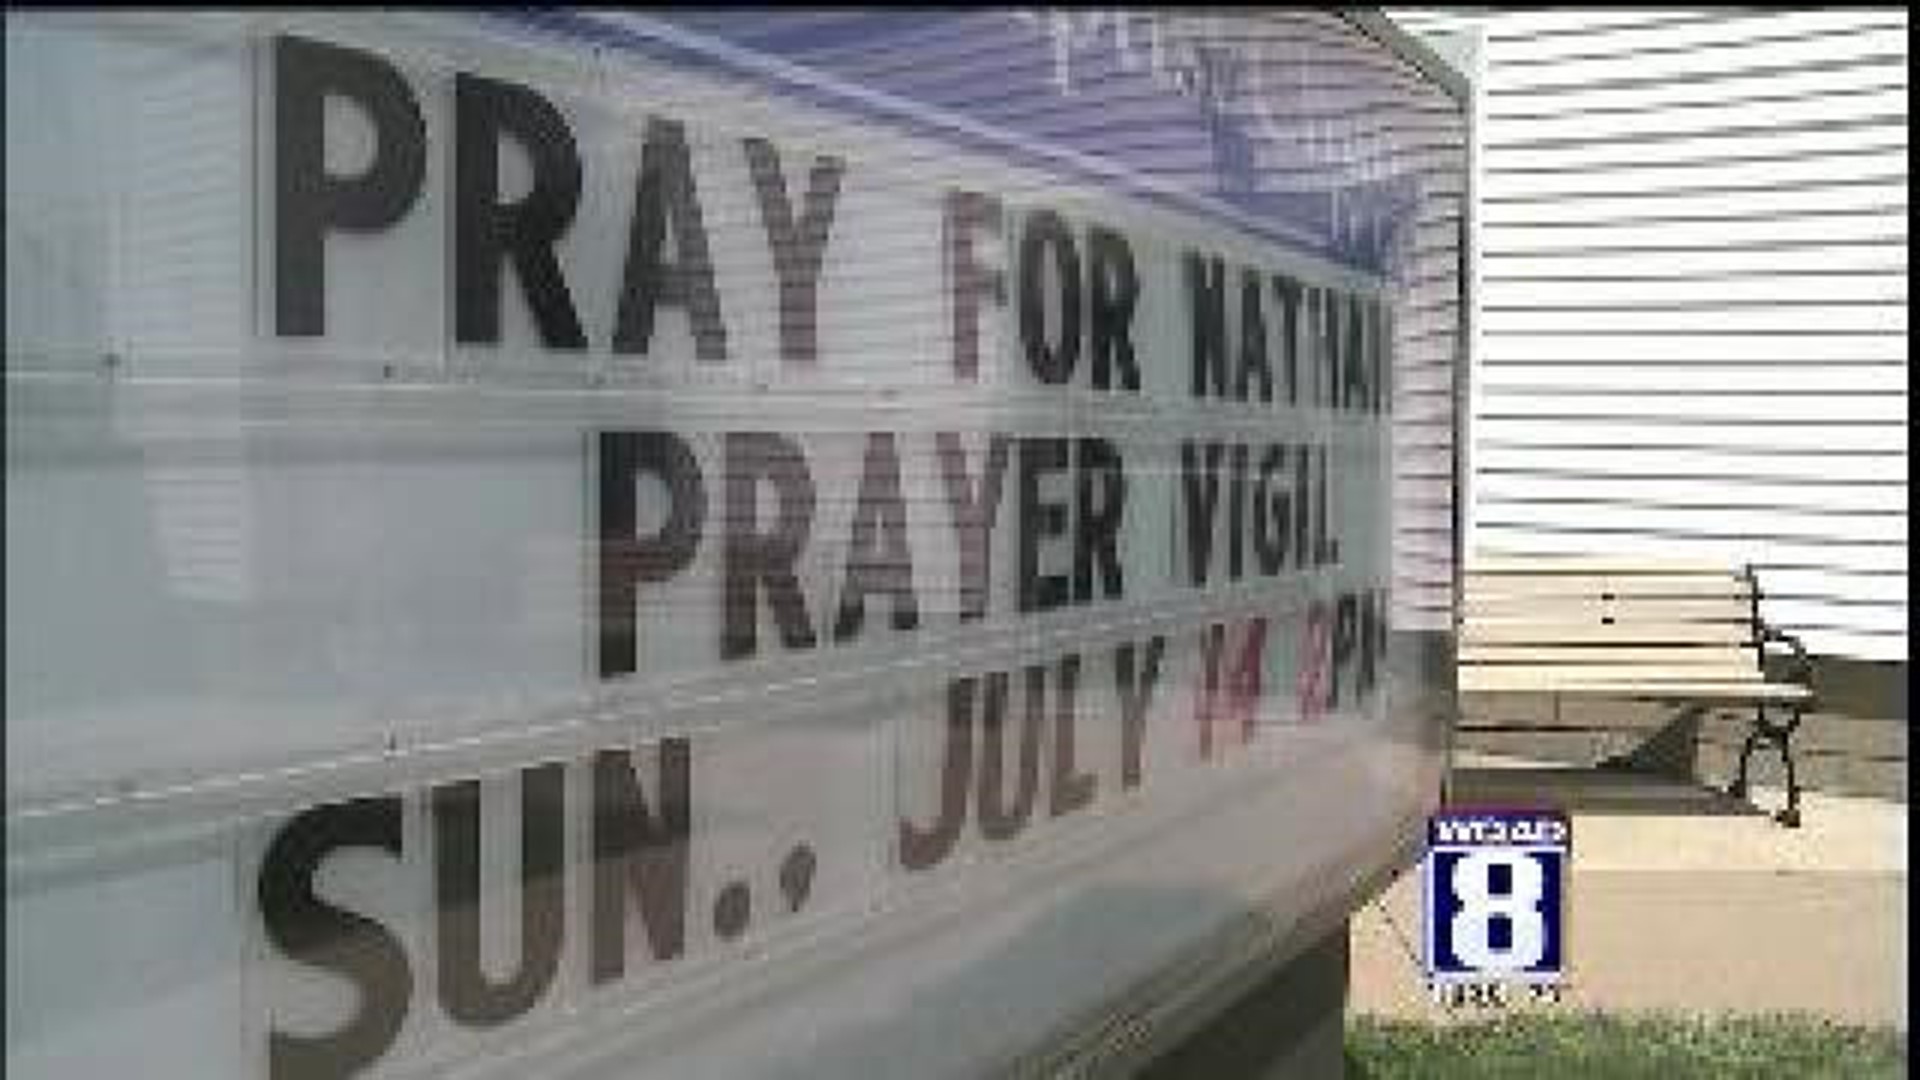 Local Church Plans Prayer Vigil for Nathan